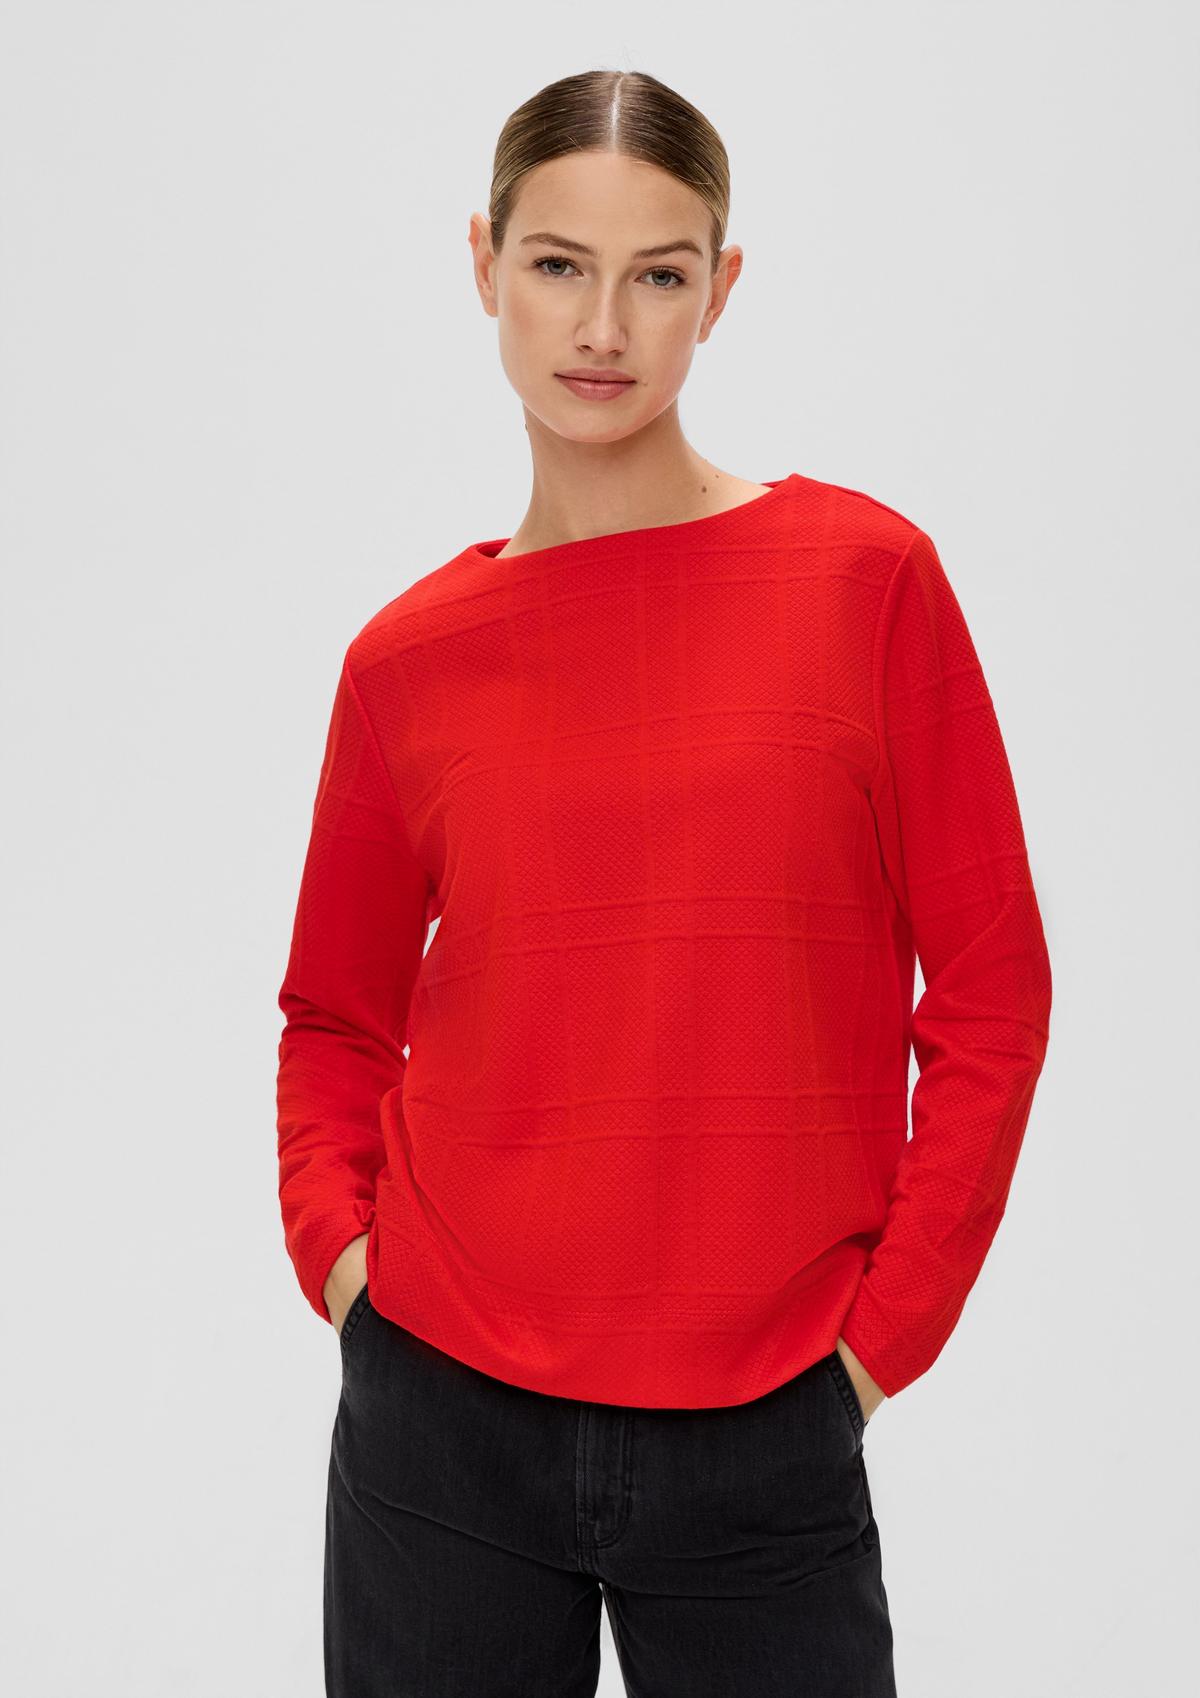 s.Oliver Sweatshirt pulover z vzorčasto teksturo